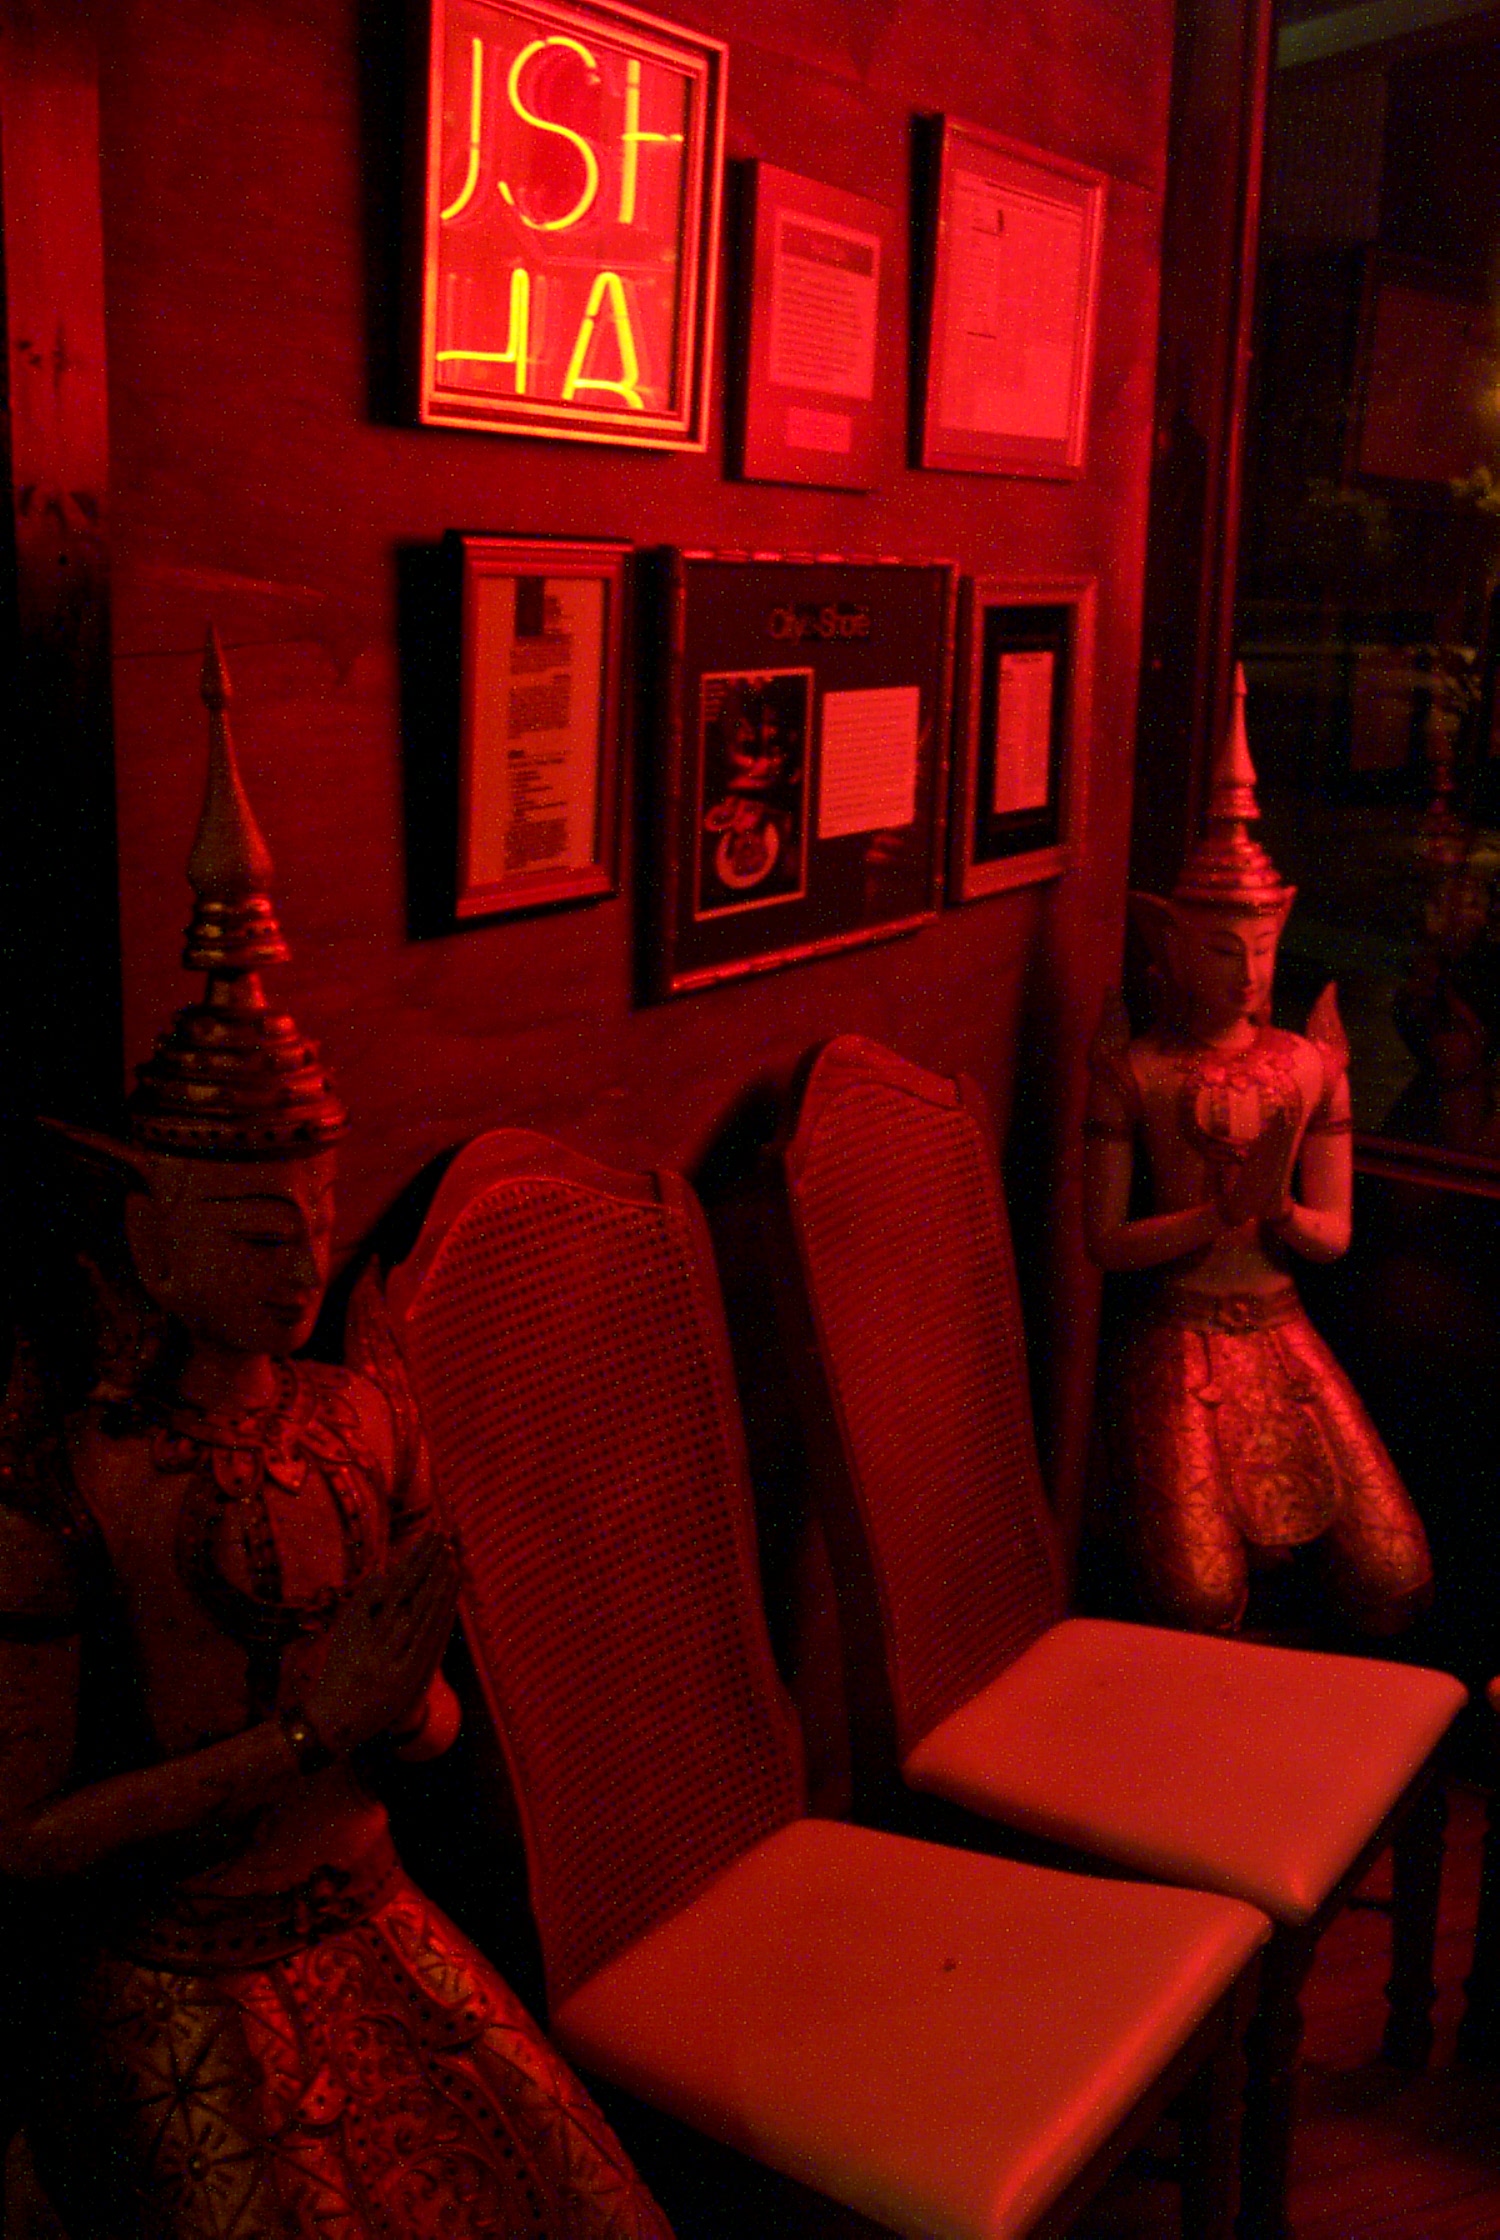 Siam River restaurant entrance